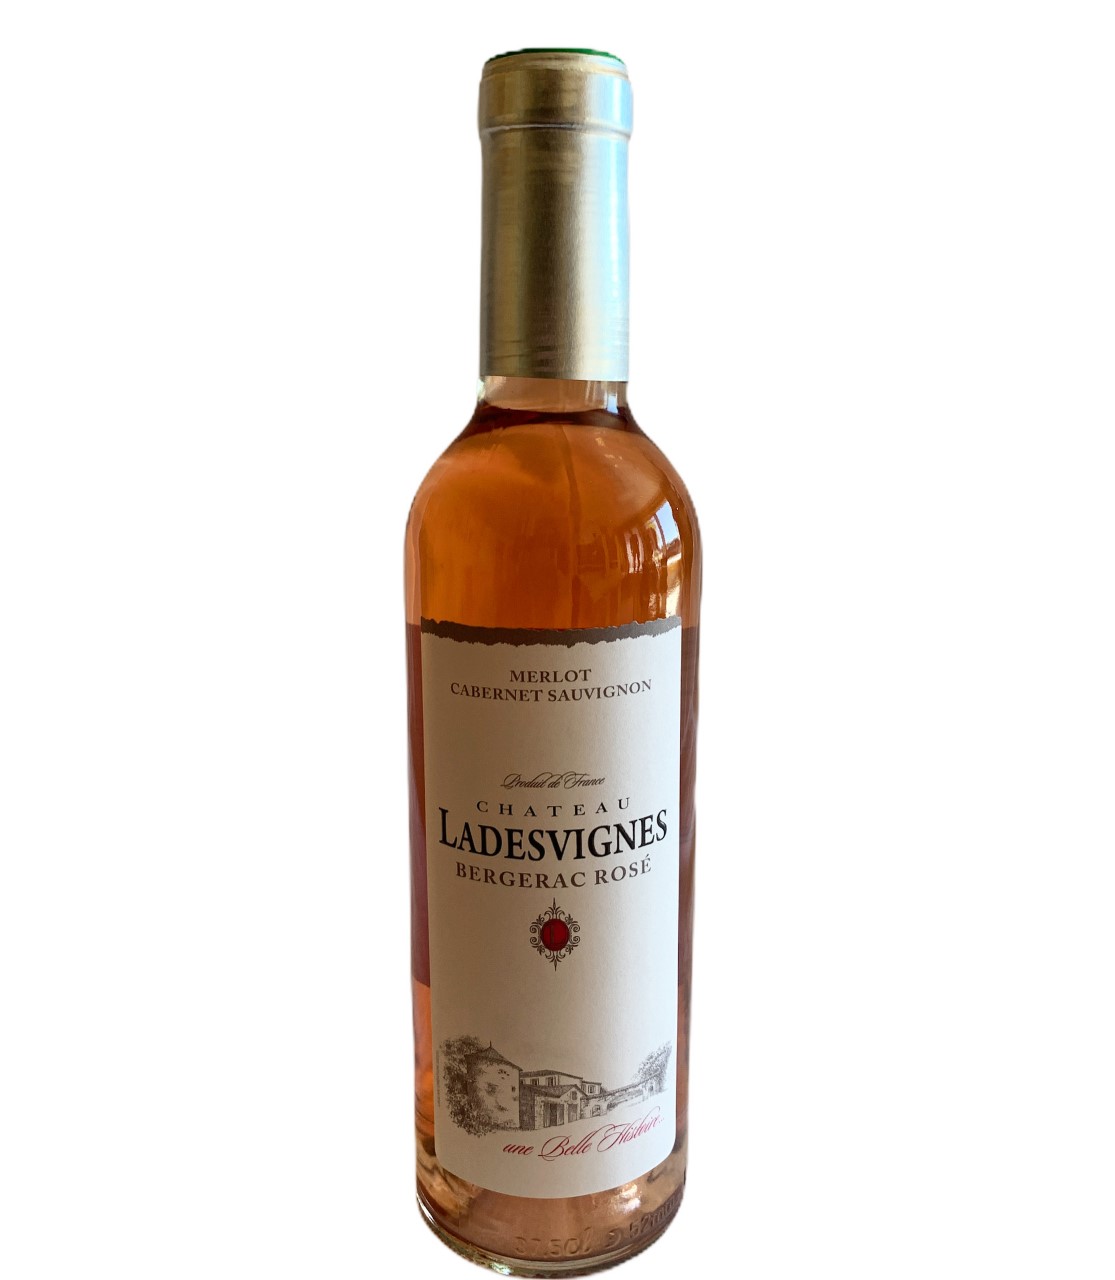 Ch. Ladesvignes 37.5 cl Bergerac rosé 2019